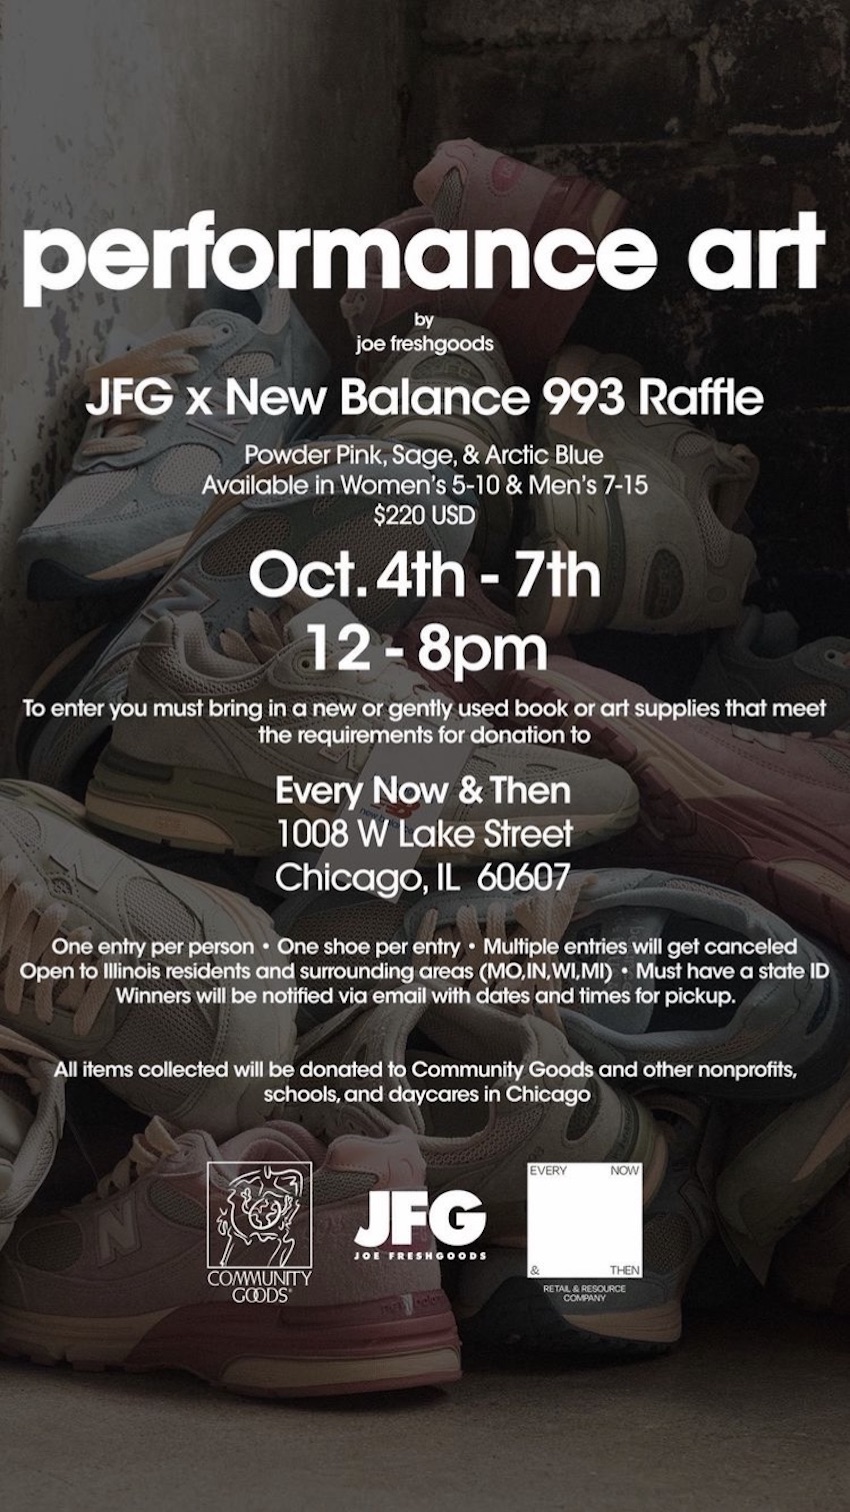 Joe Freshgoods New Balance 993 Performance Art Release Date